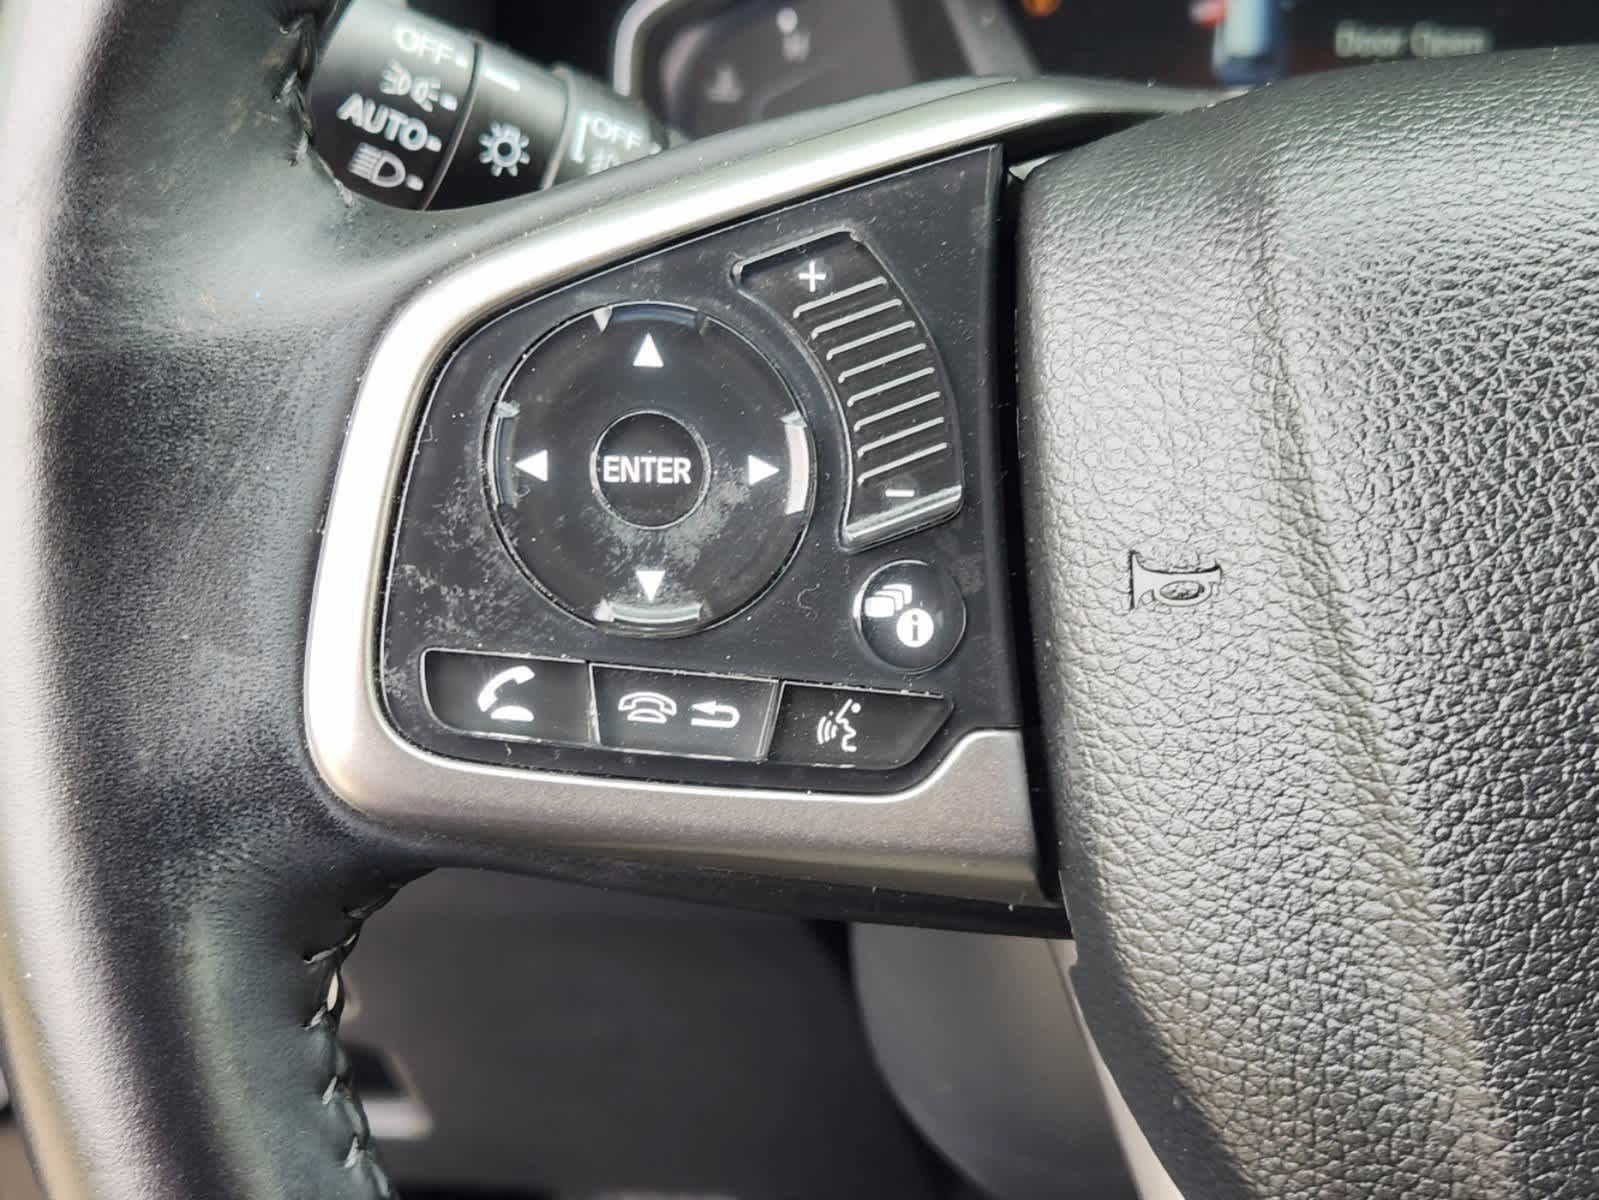 2018 Honda CR-V Touring 29